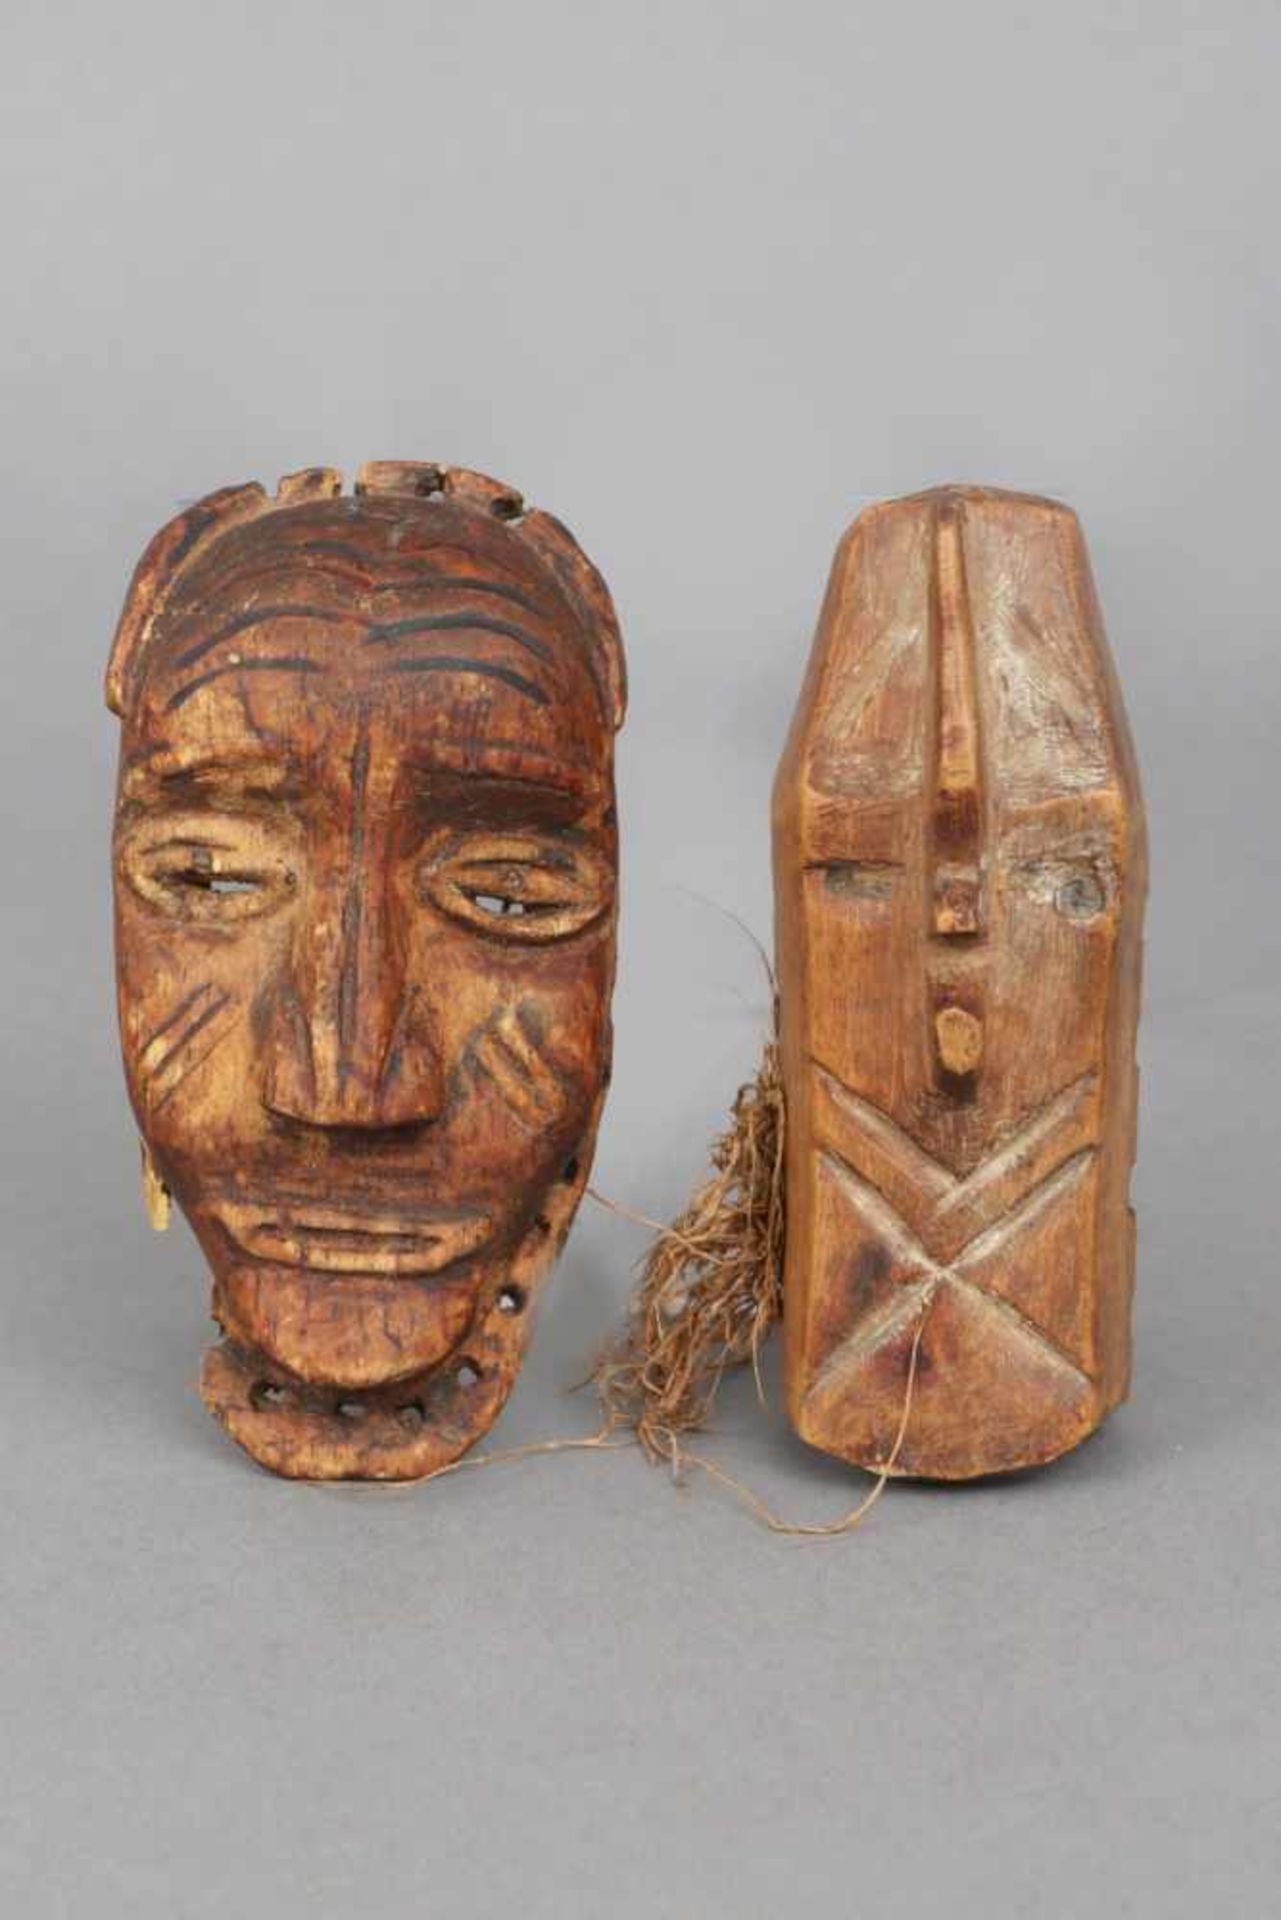 2 afrikanische Passport-Masken Zentralafrika (Kongo), Holz, geschnitzt, Kerbdekor, 1 Maske mit